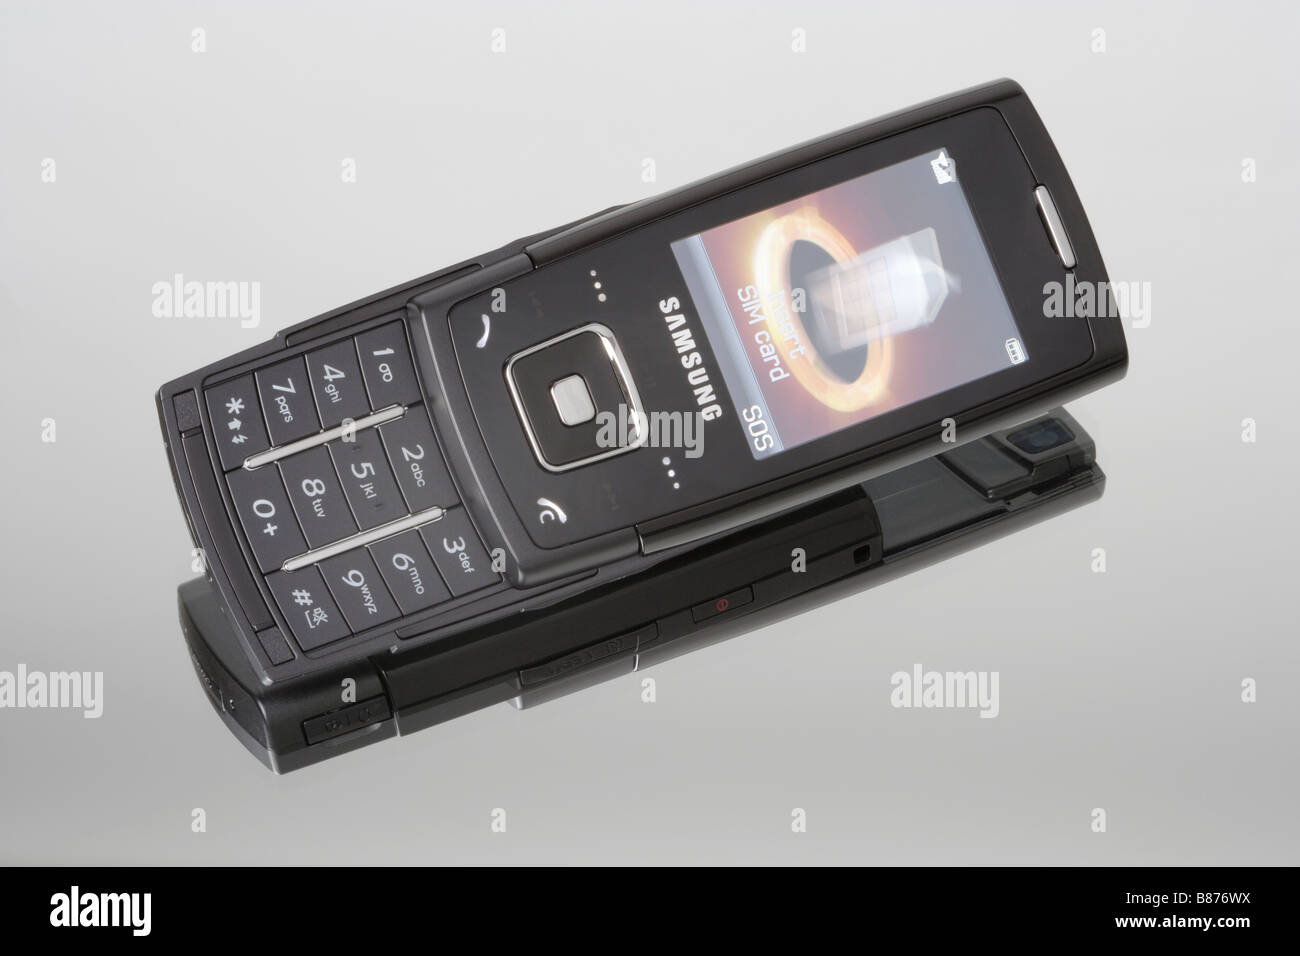 Samsung Mobile telefono cellulare music player Foto Stock